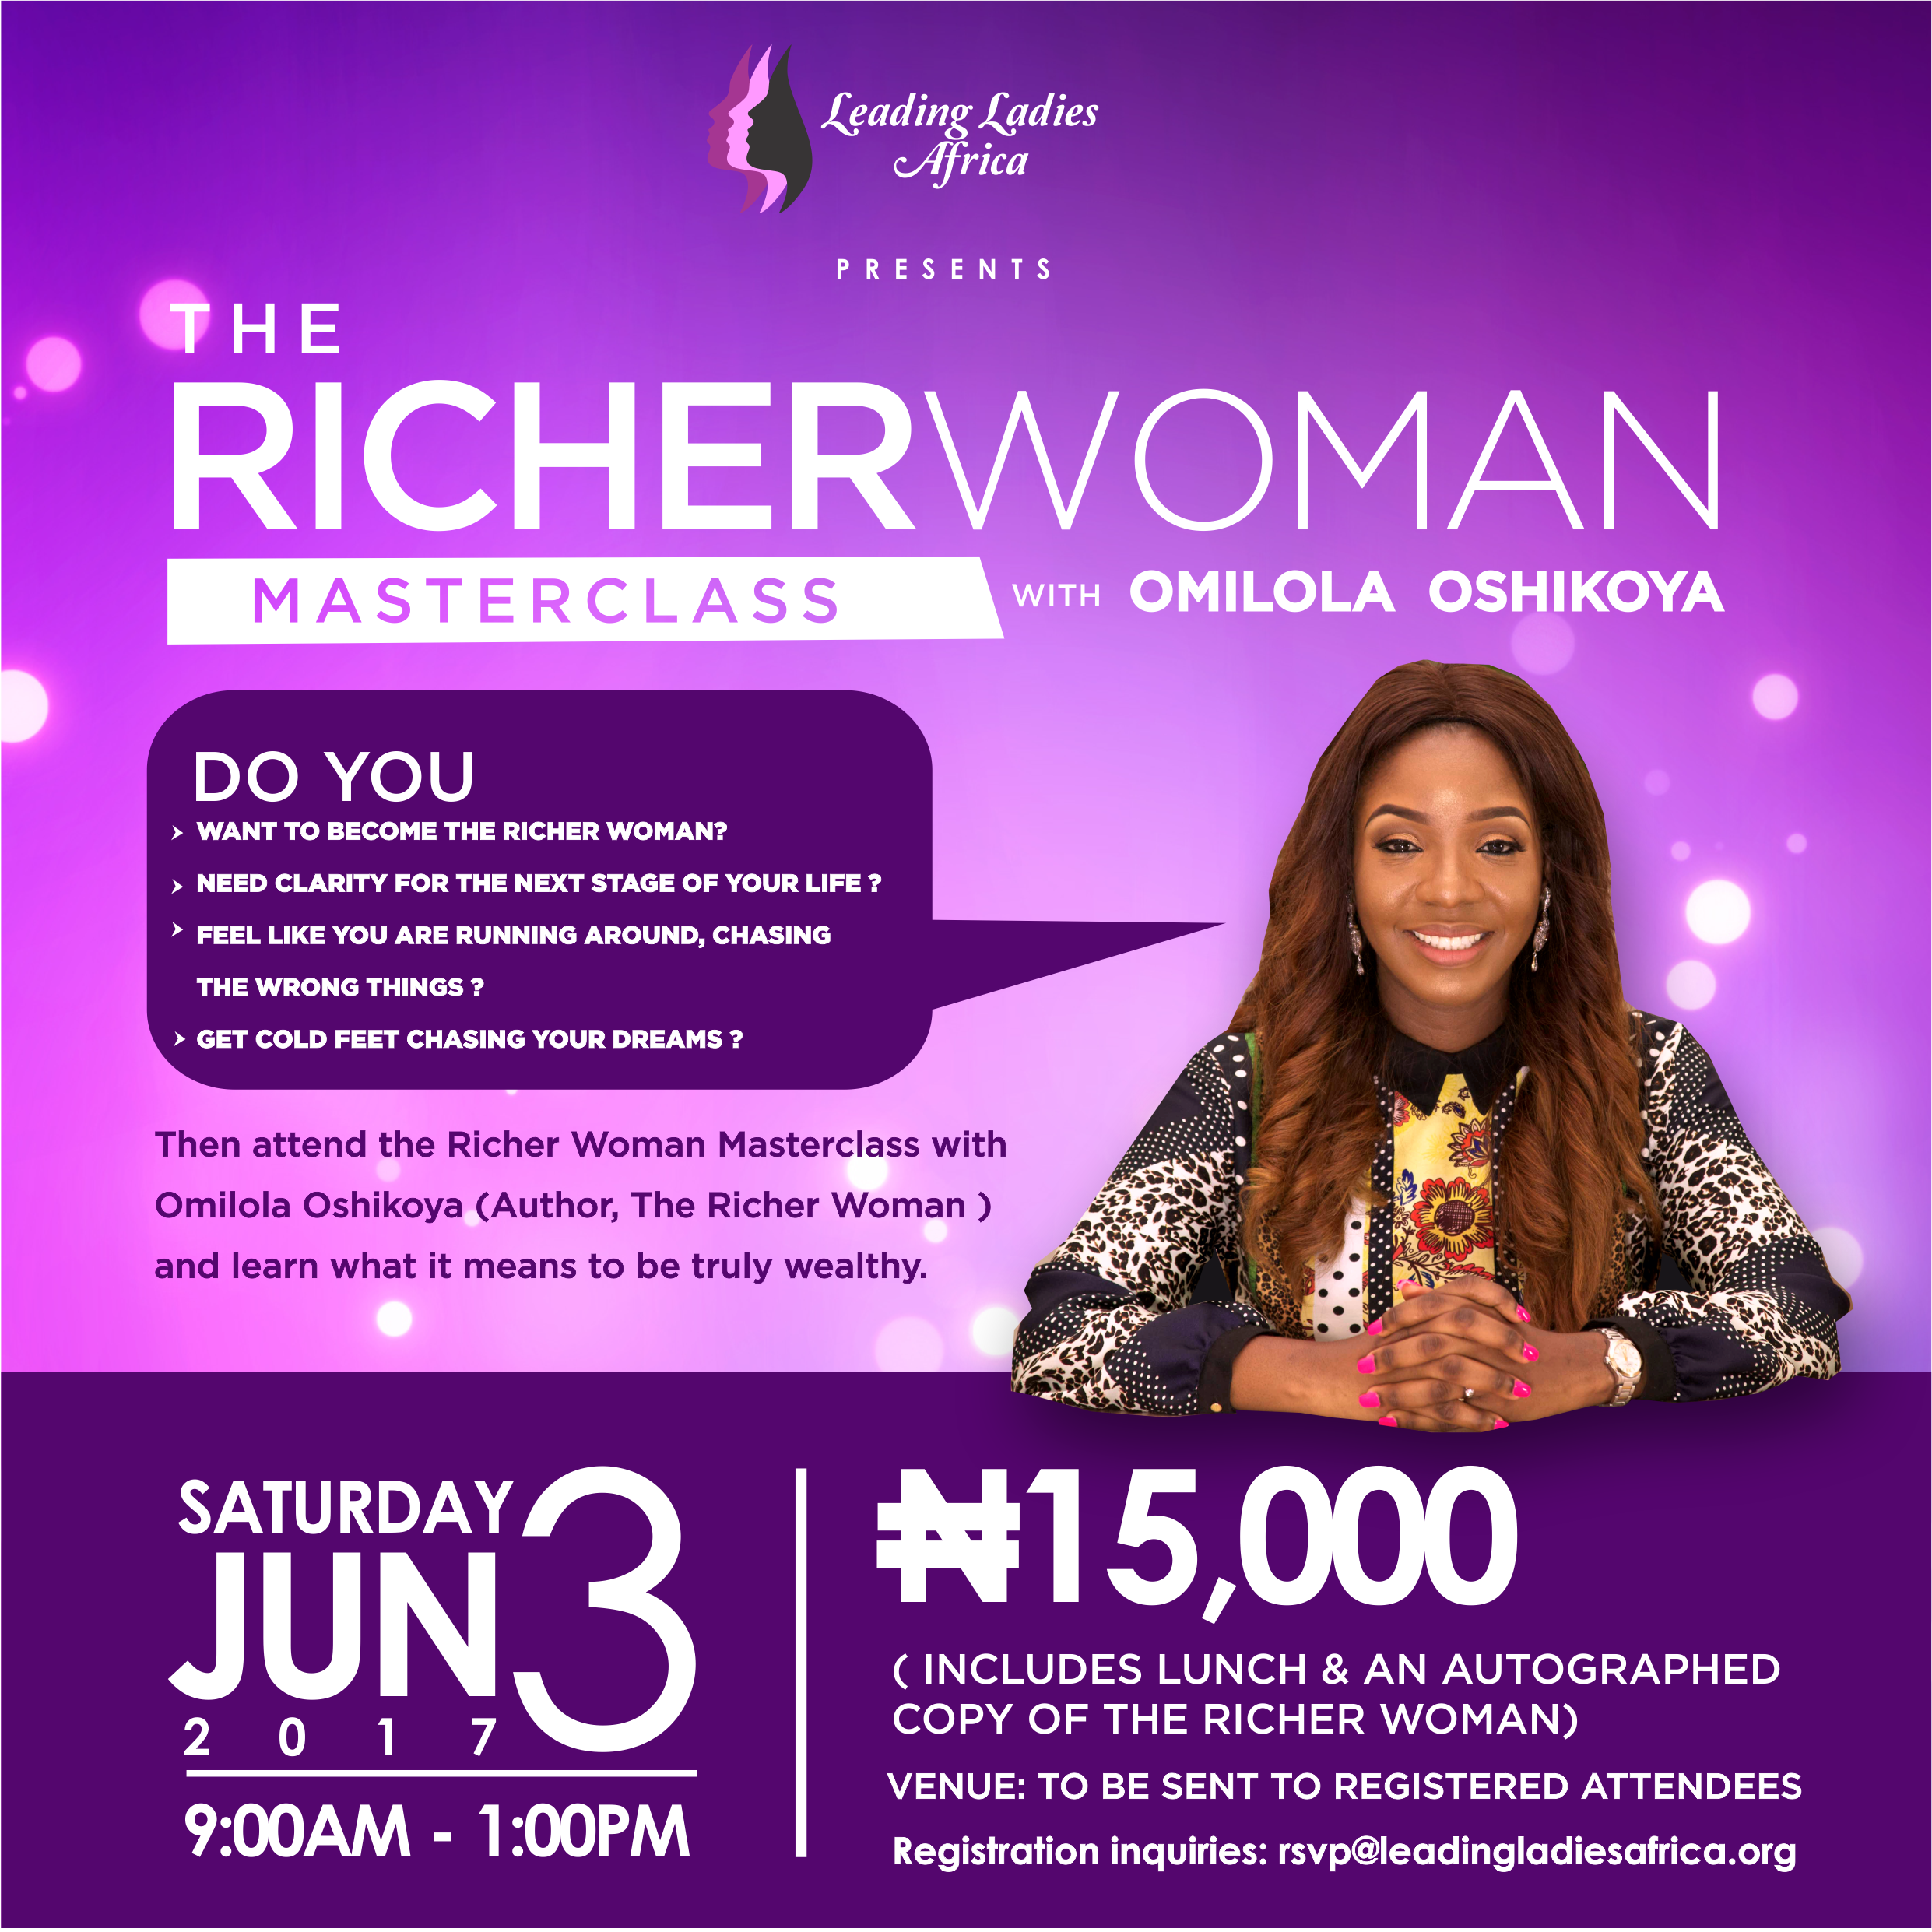 The Richer Woman Masterclass with Omilola Oshikoya